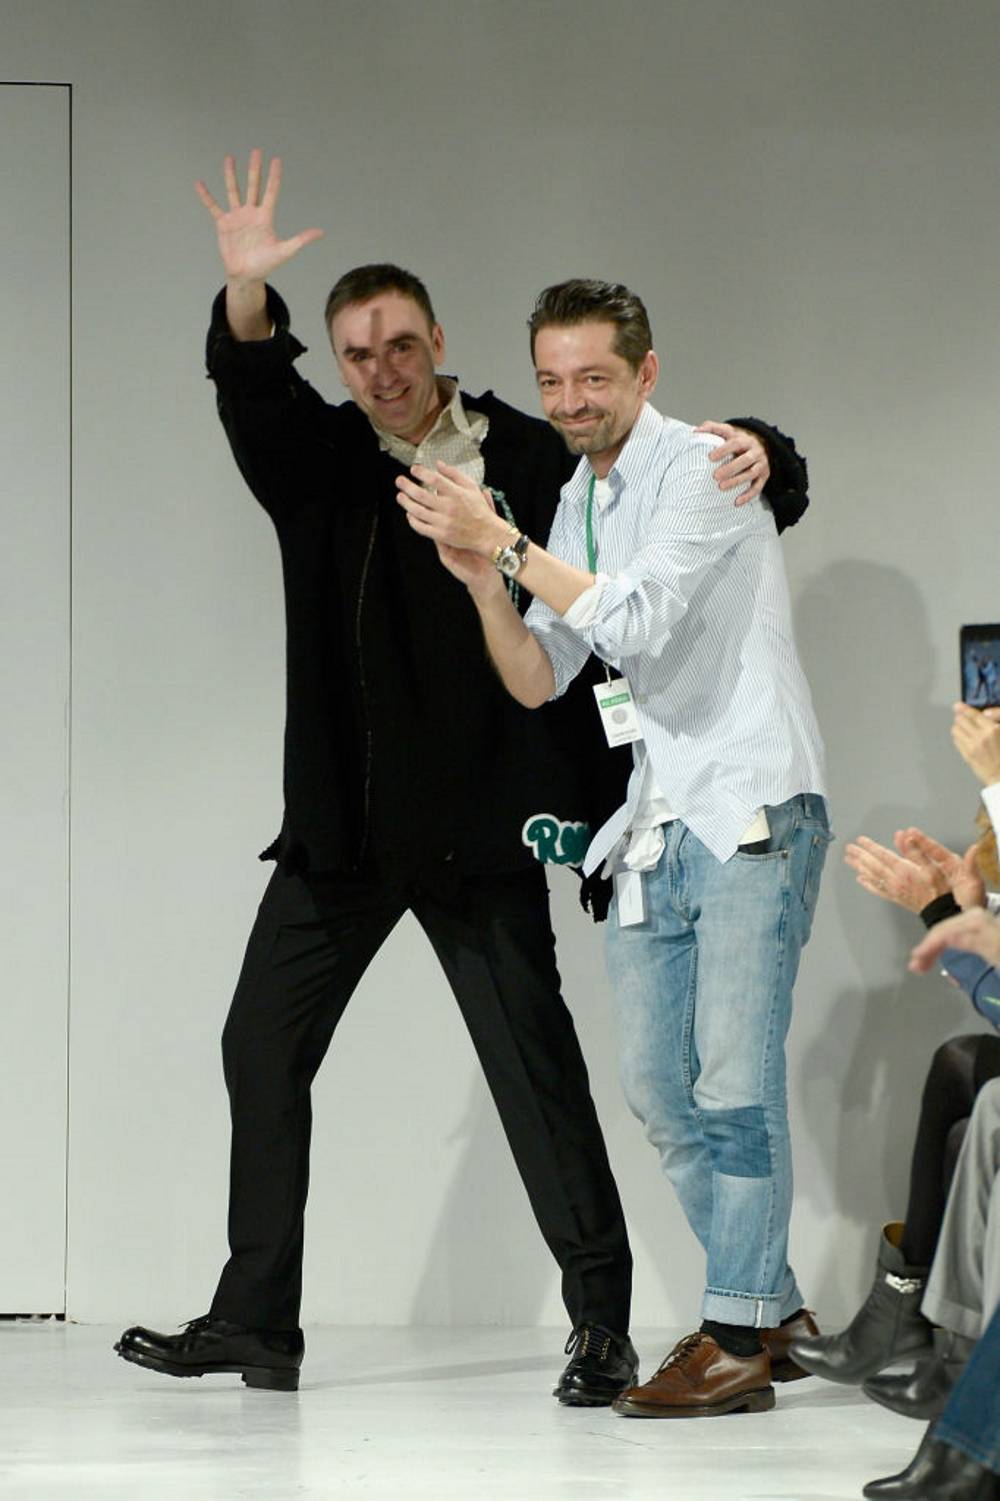 Od lewej: Raf Simons i Pieter Mulier na pokazie Calvina Kleina (Fot. Fernanda Calfat/Getty Images For New York Fashion Week)